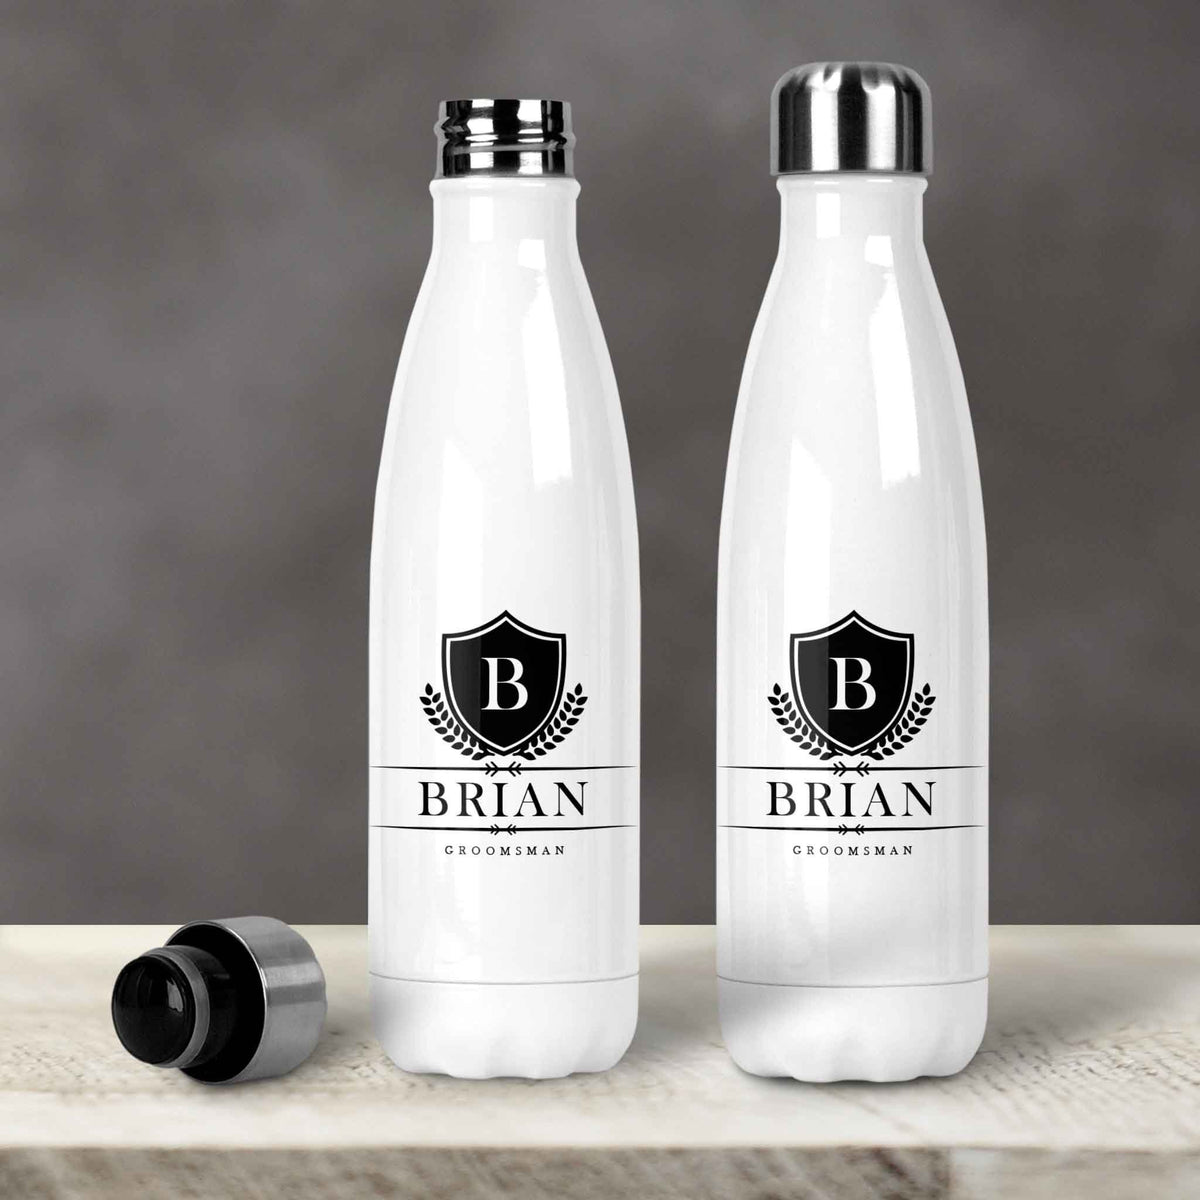 Personalized Water Bottles | Custom Stainless Steel Water Bottles | 20 oz | Heraldic Crest